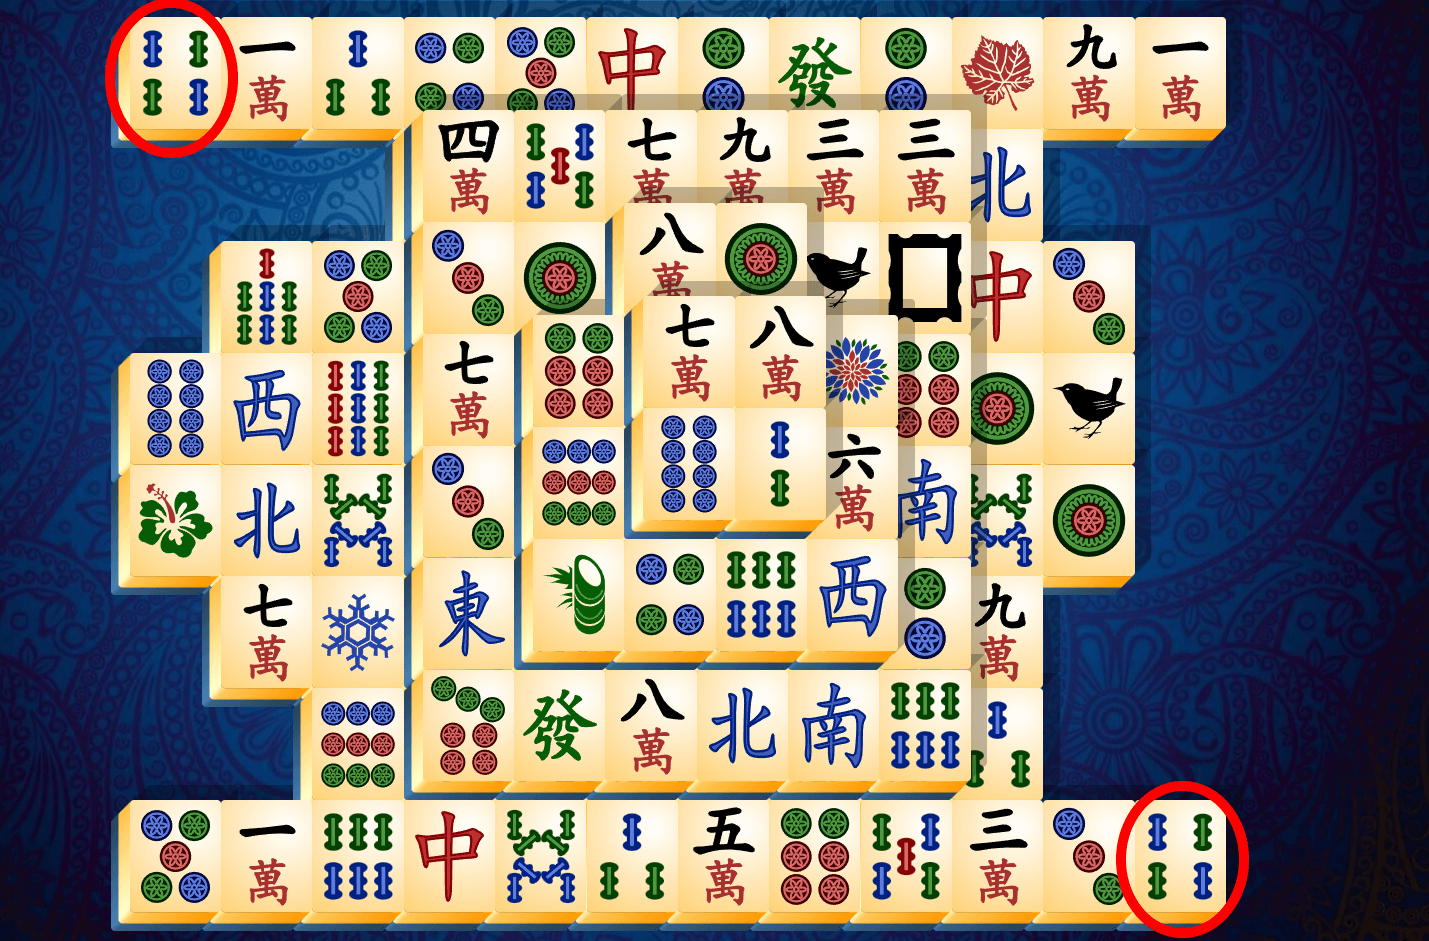 Tutorial Mahjong Solitario, fase 5